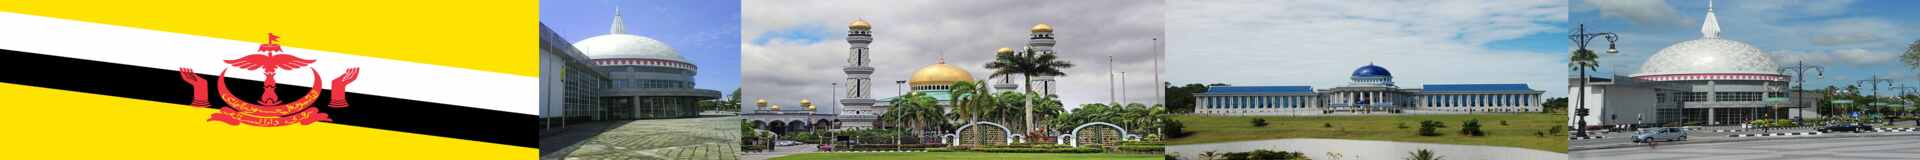 Global Brunei Document Management System Tenders